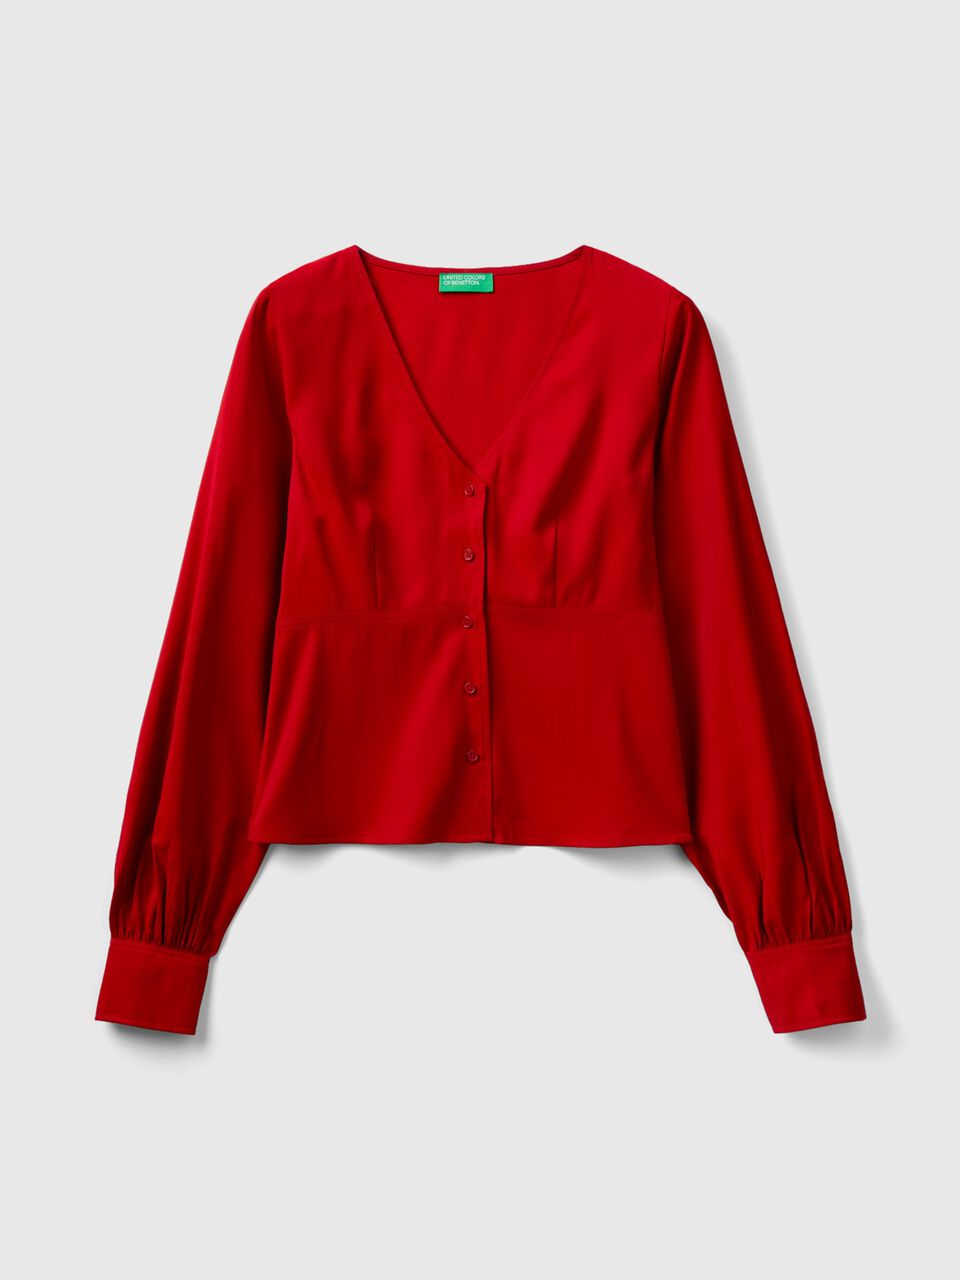 - in Benetton | cotton V-neck Red shirt 100%